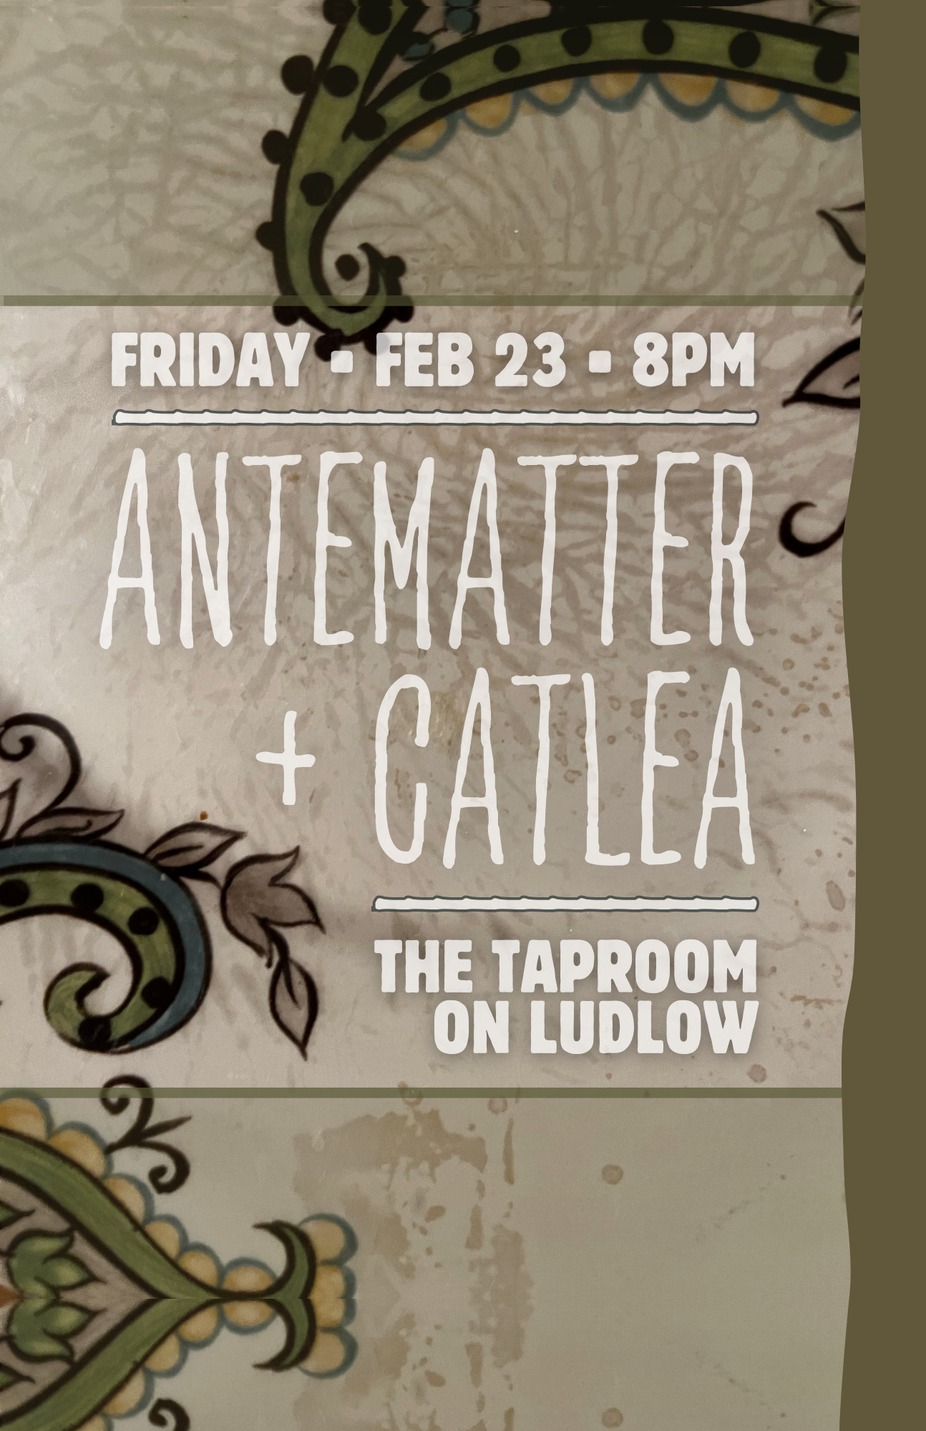 Antematter + Catlea event photo